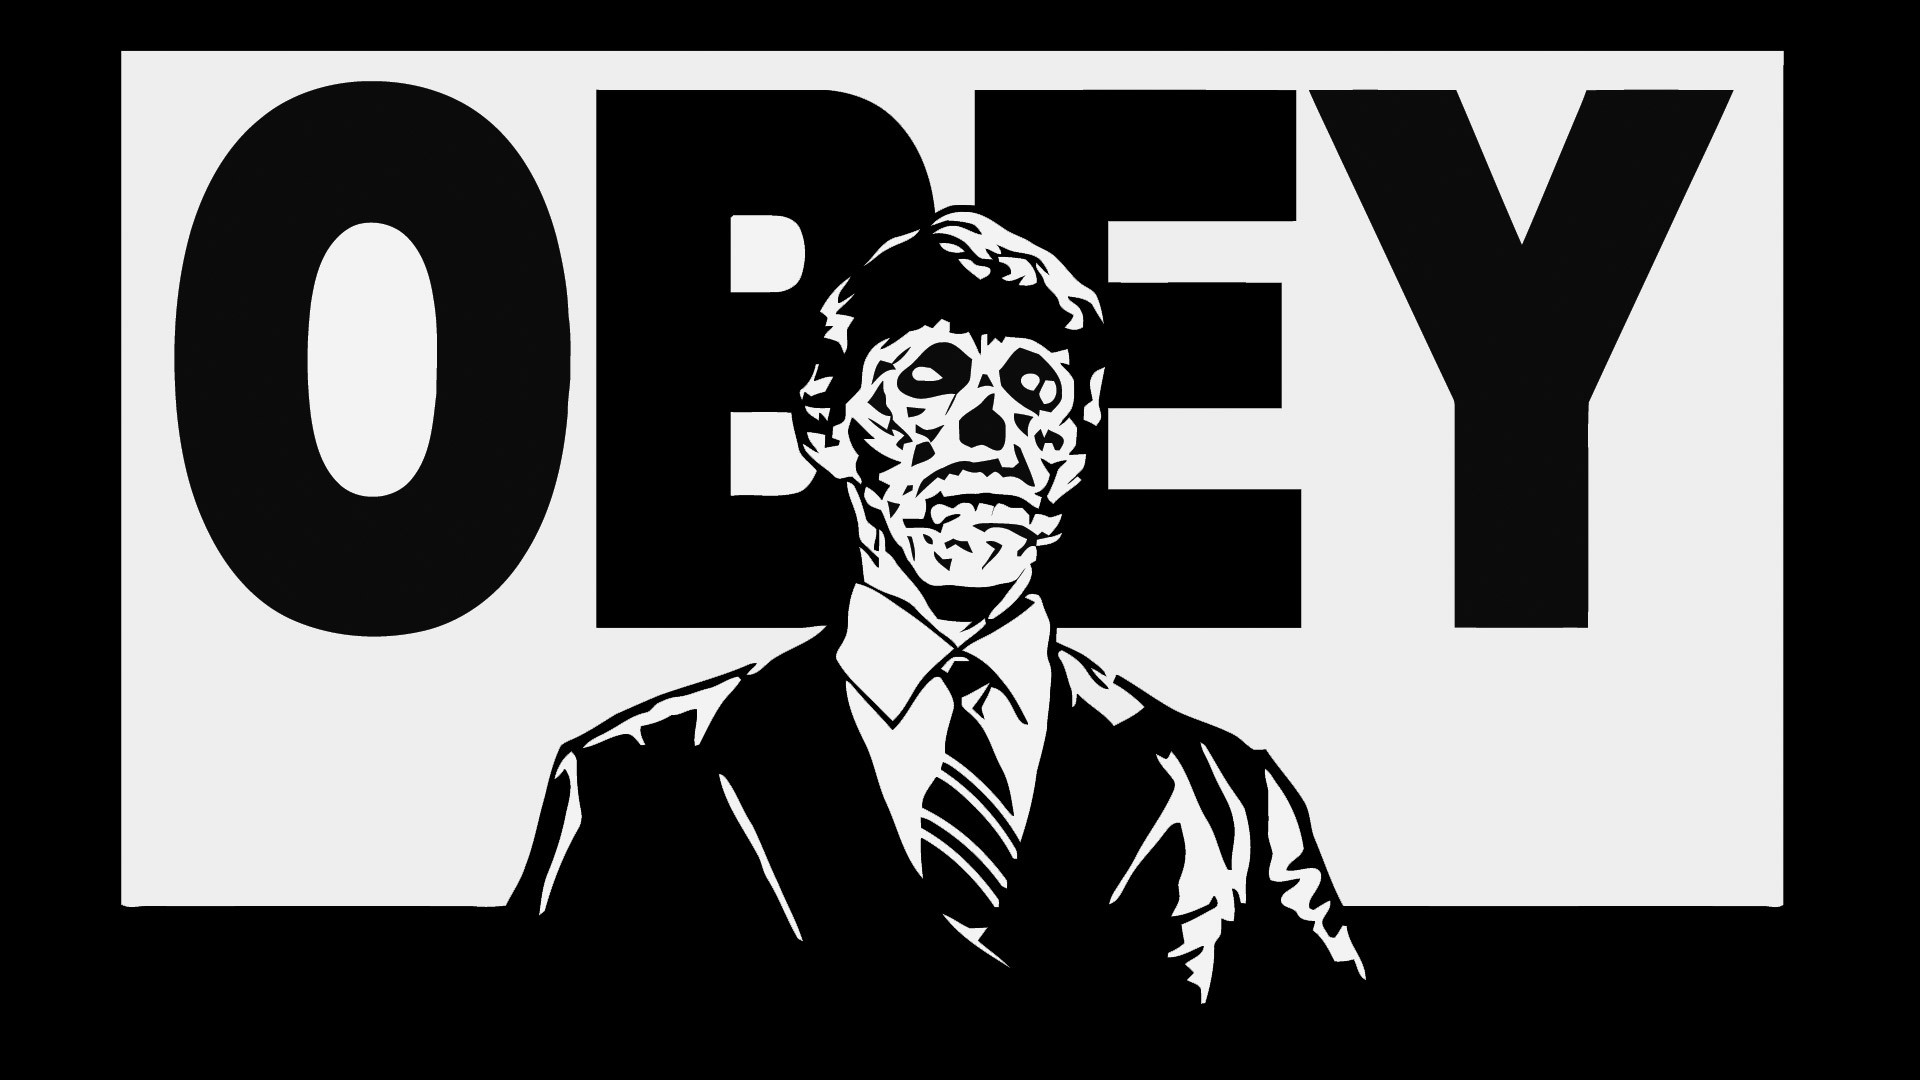 Obey-skeleton-logo-brand-wallpapers-1920x1080.jpg